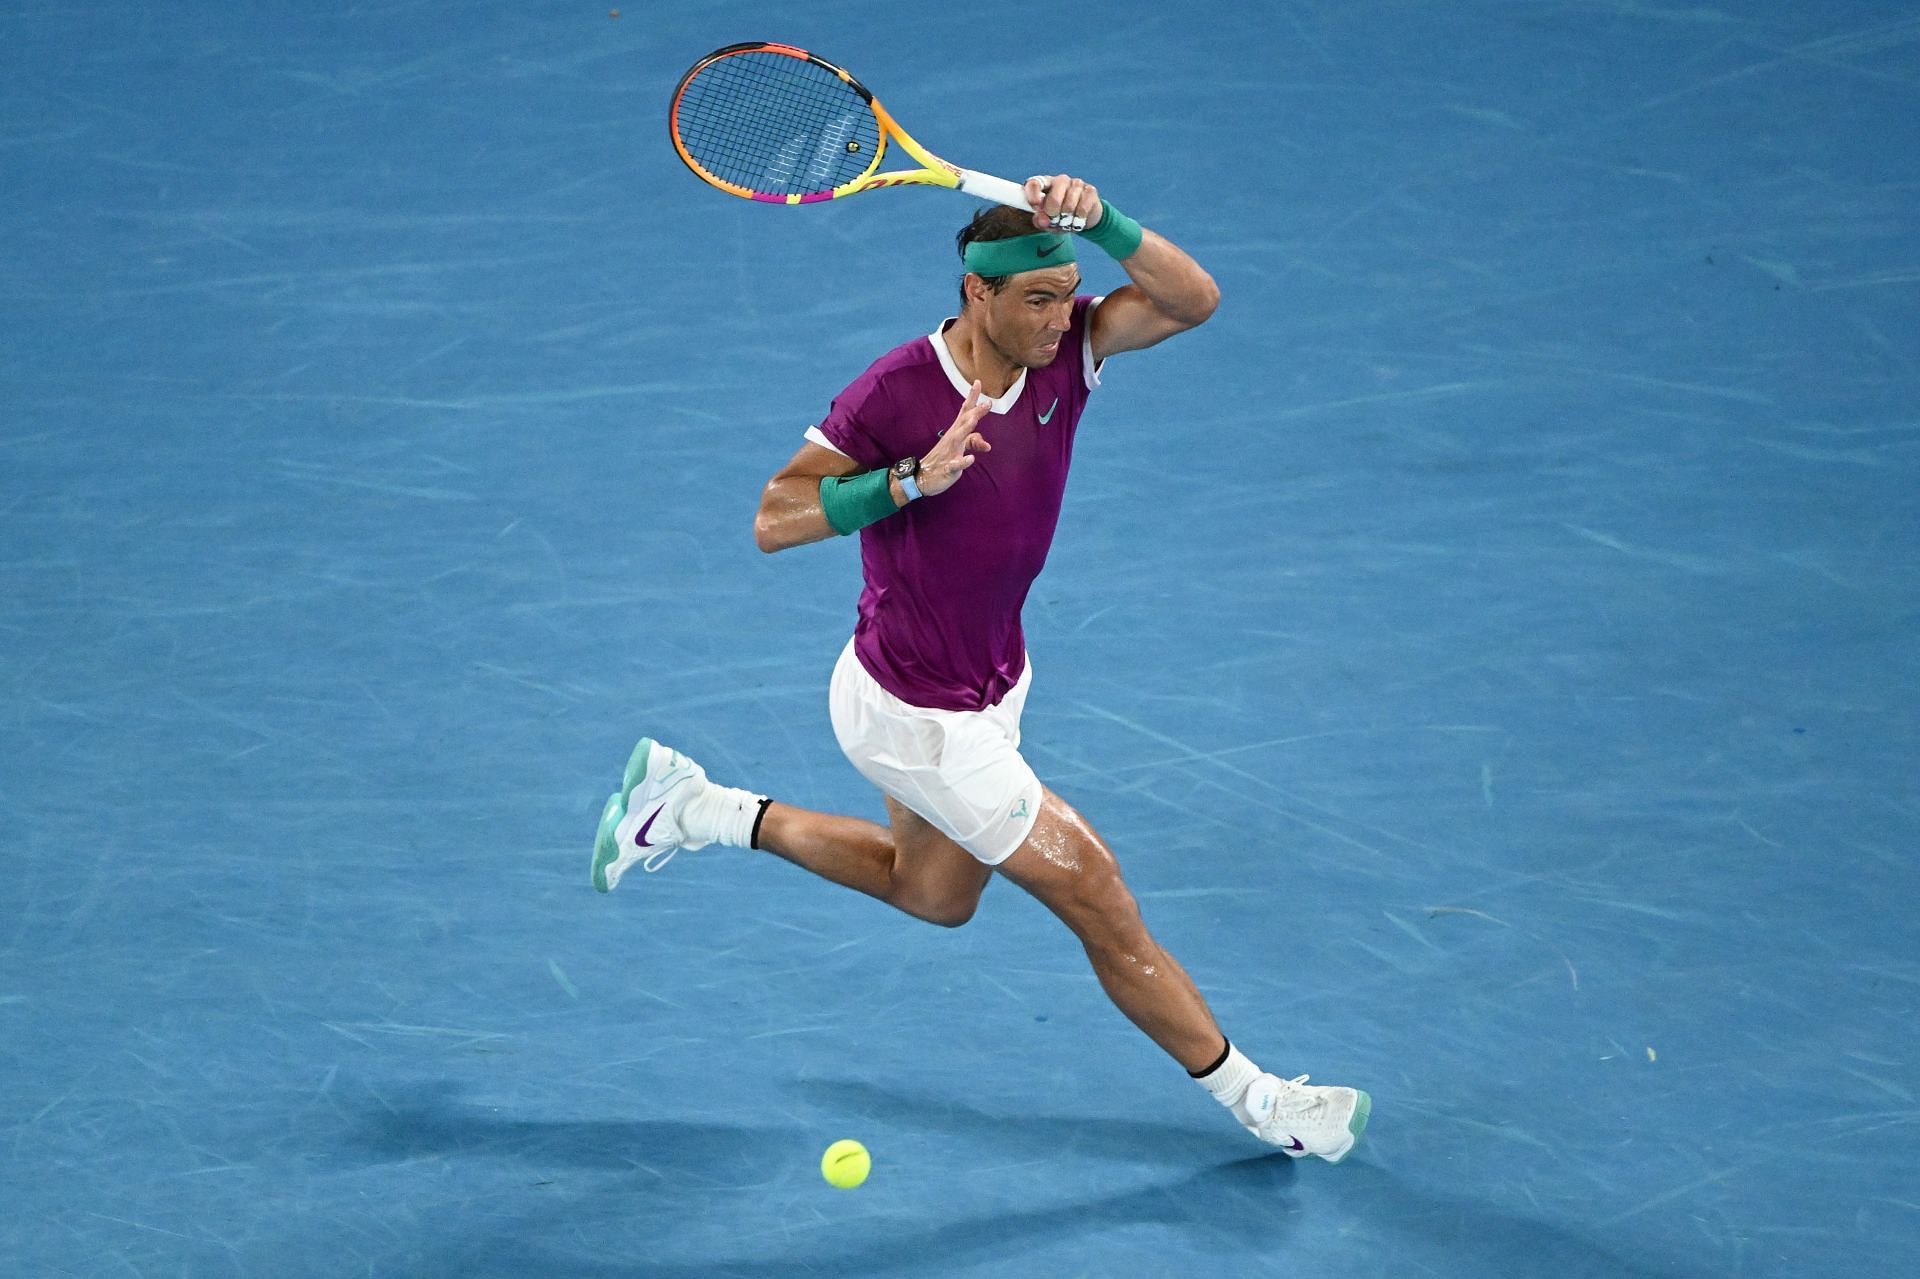 Rafael Nadal is naturally, a right-hander.